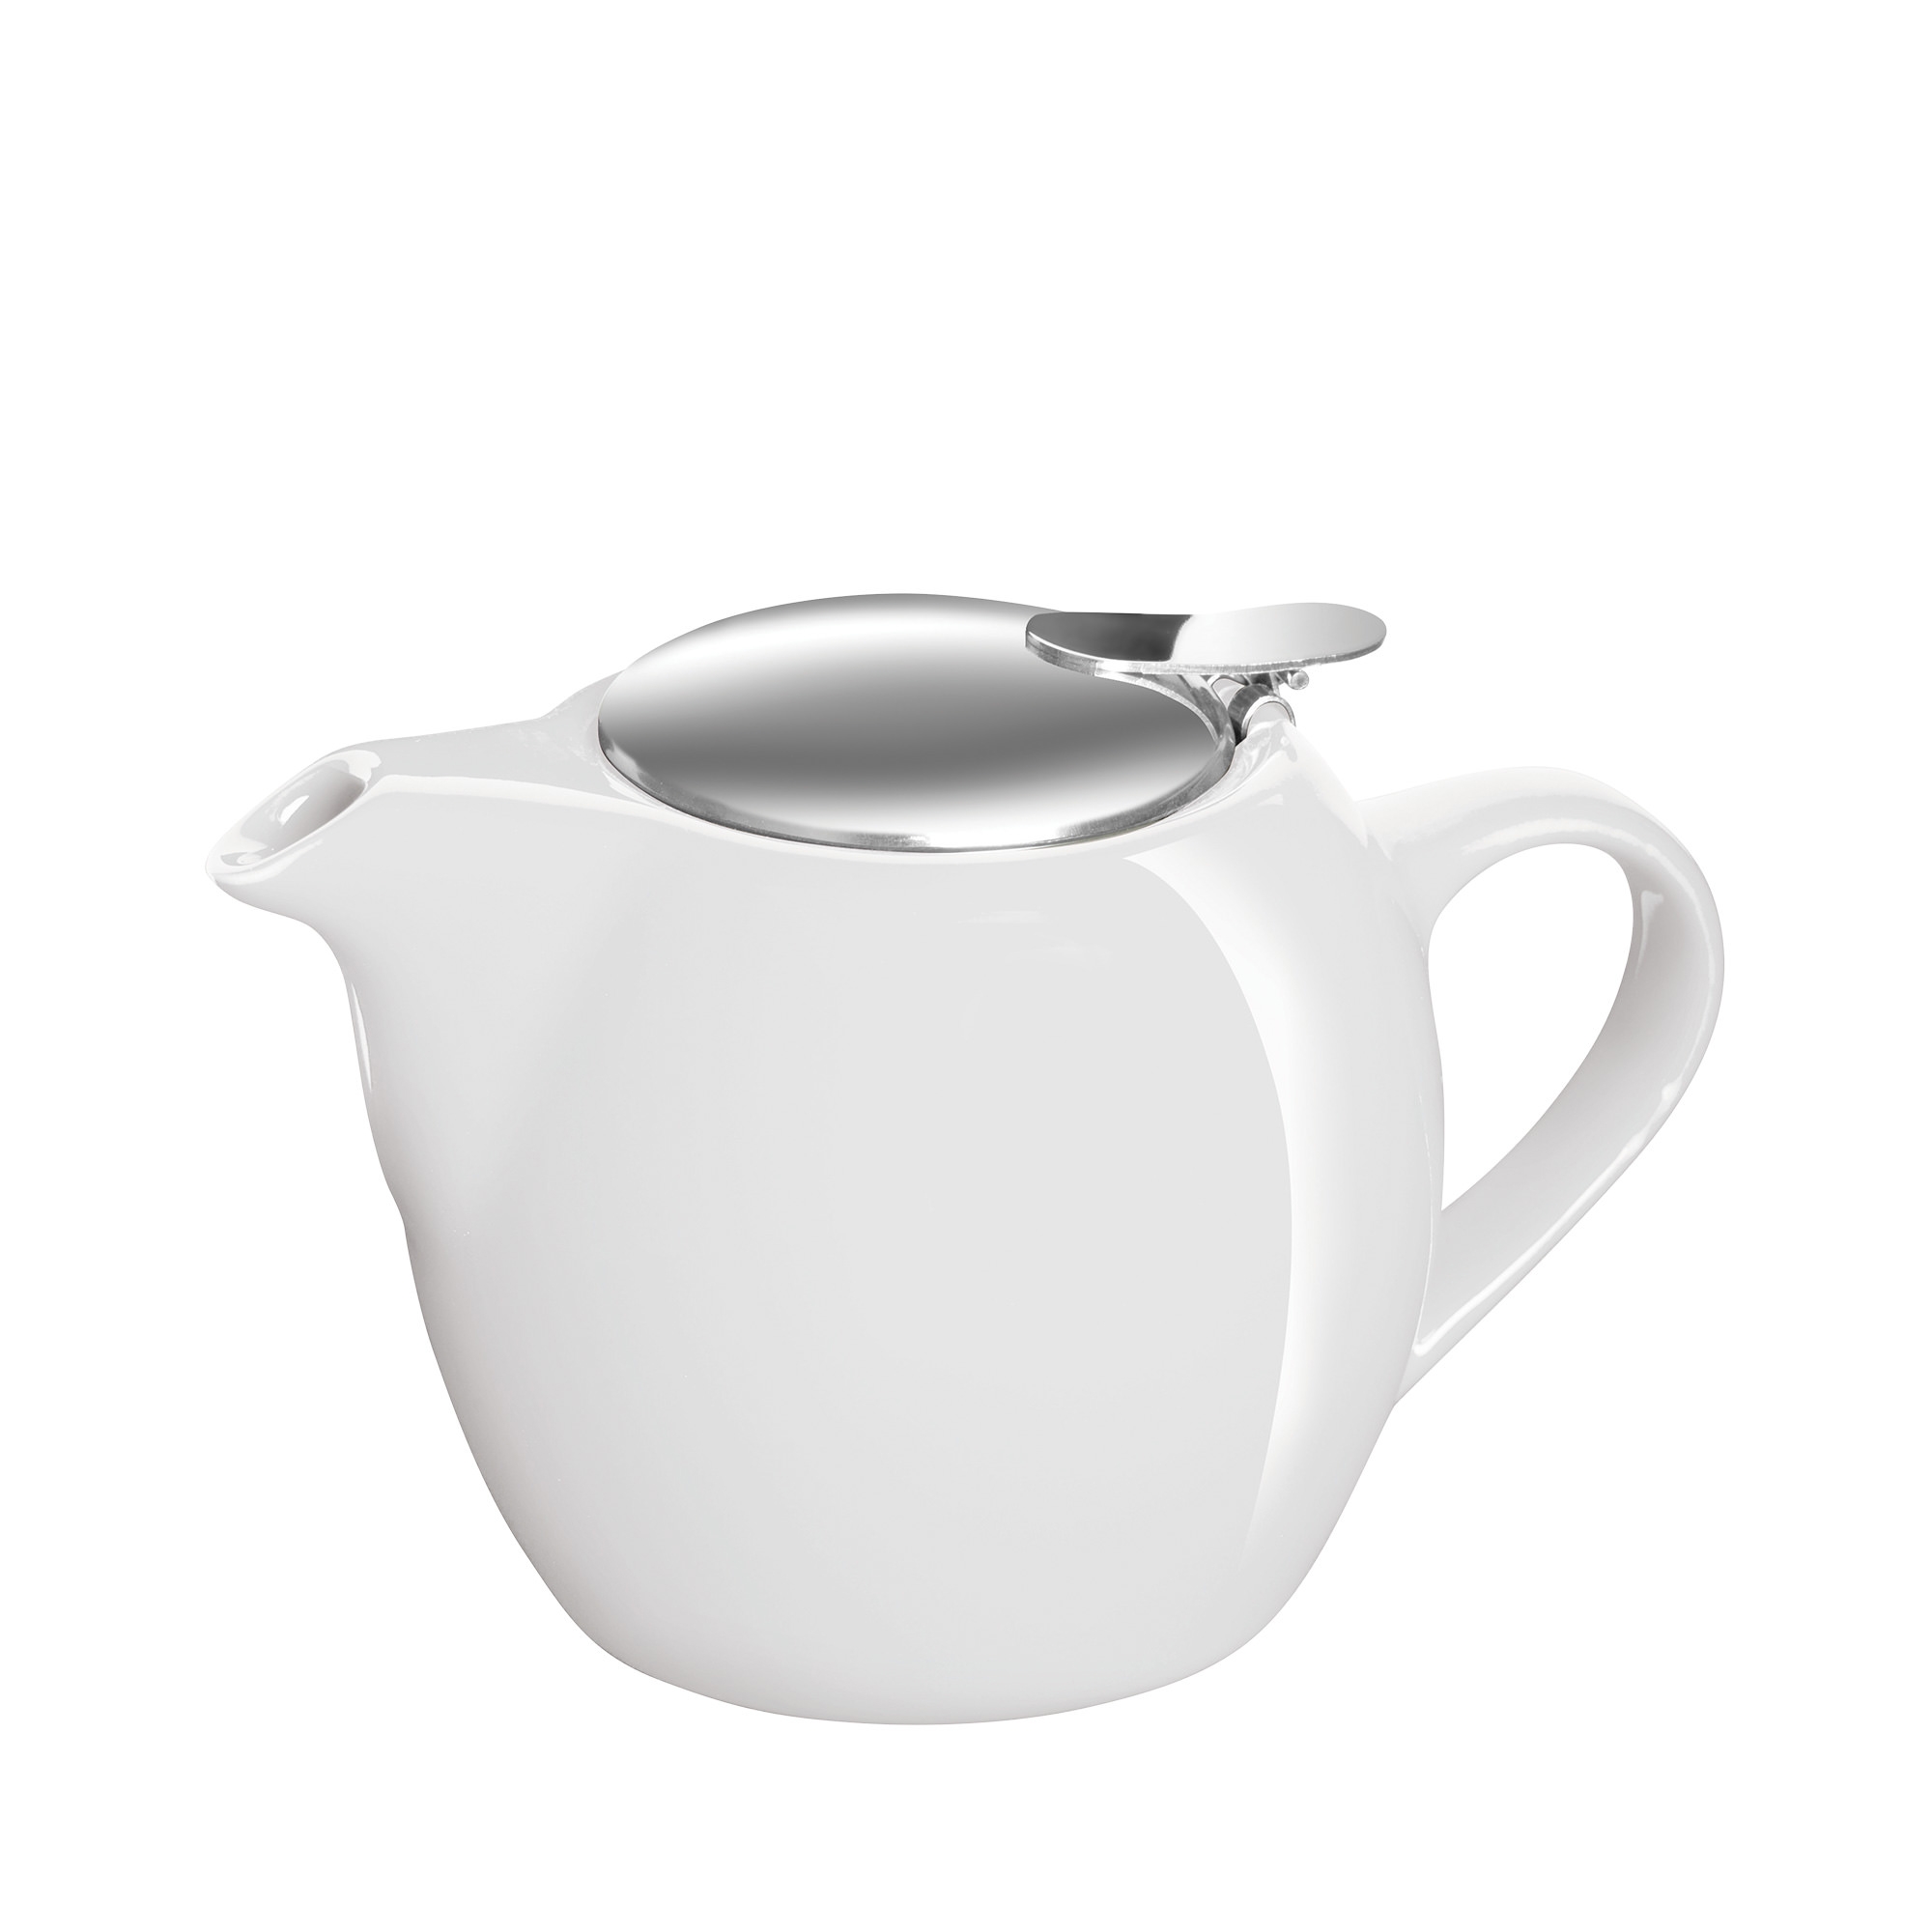 Avanti Camelia Ceramic Teapot 500ml Pure White Image 1